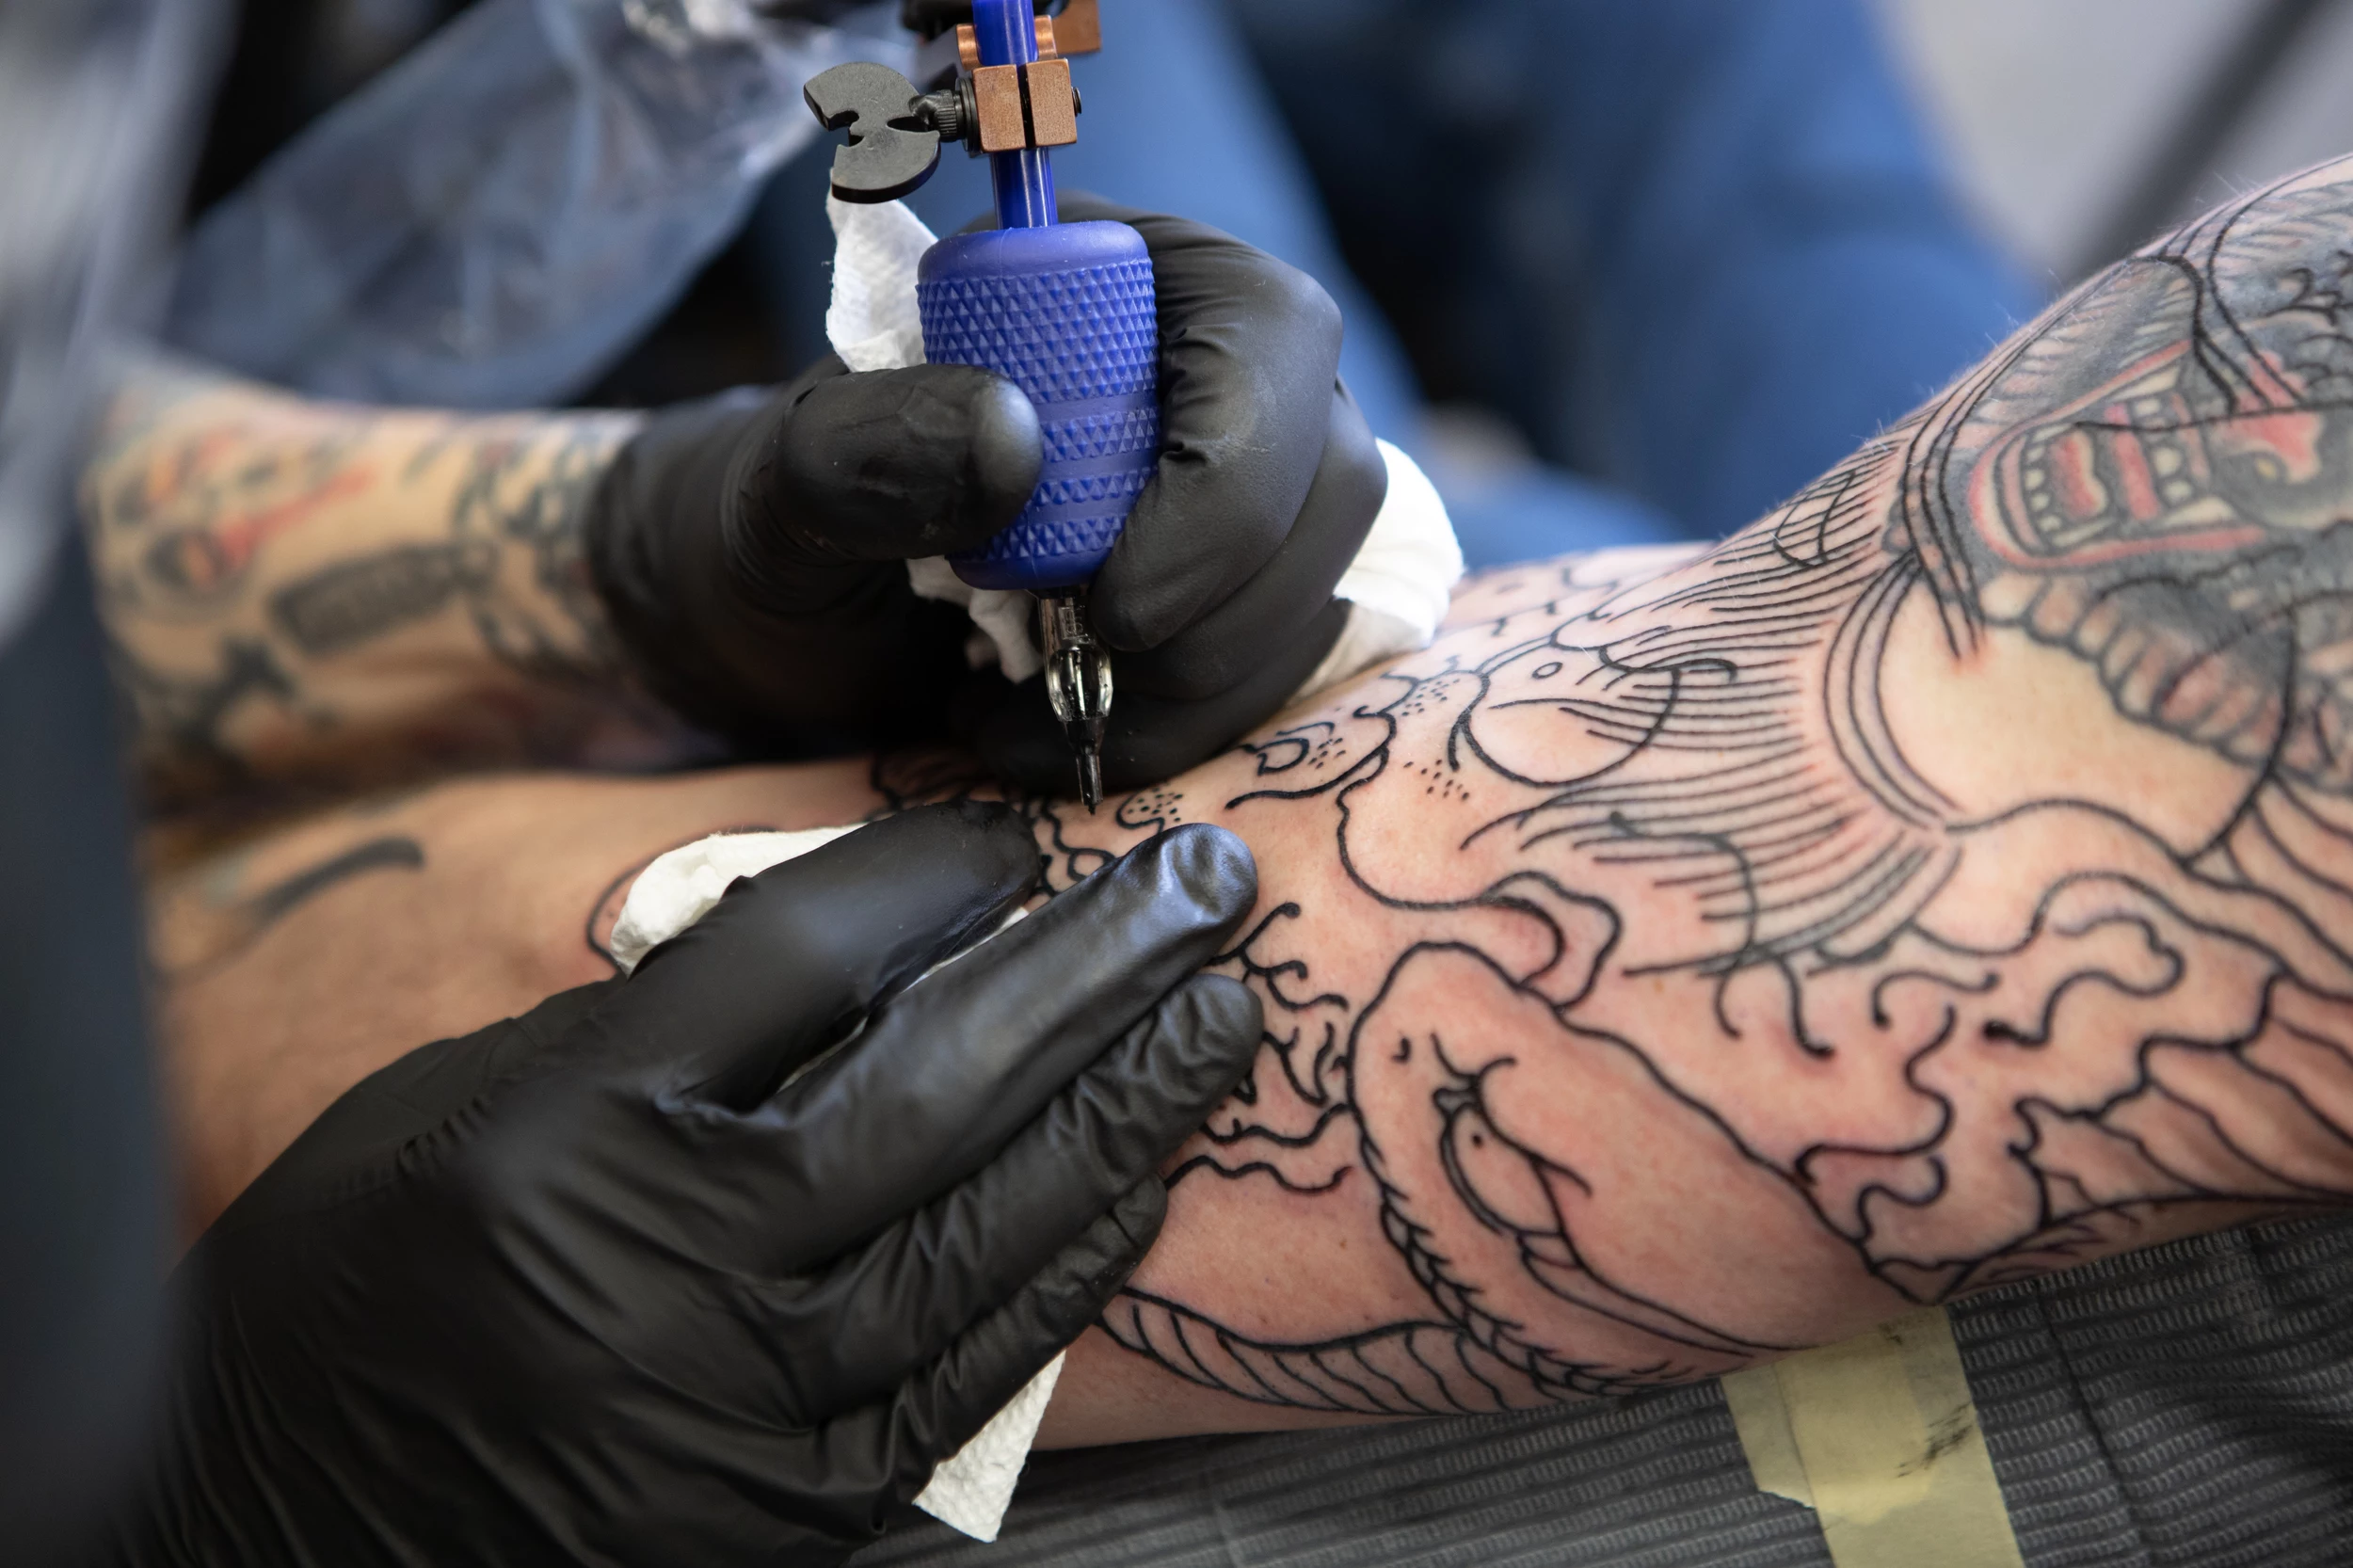 Tattoo convention helps artists stay needlesharp  Pittsburgh PostGazette